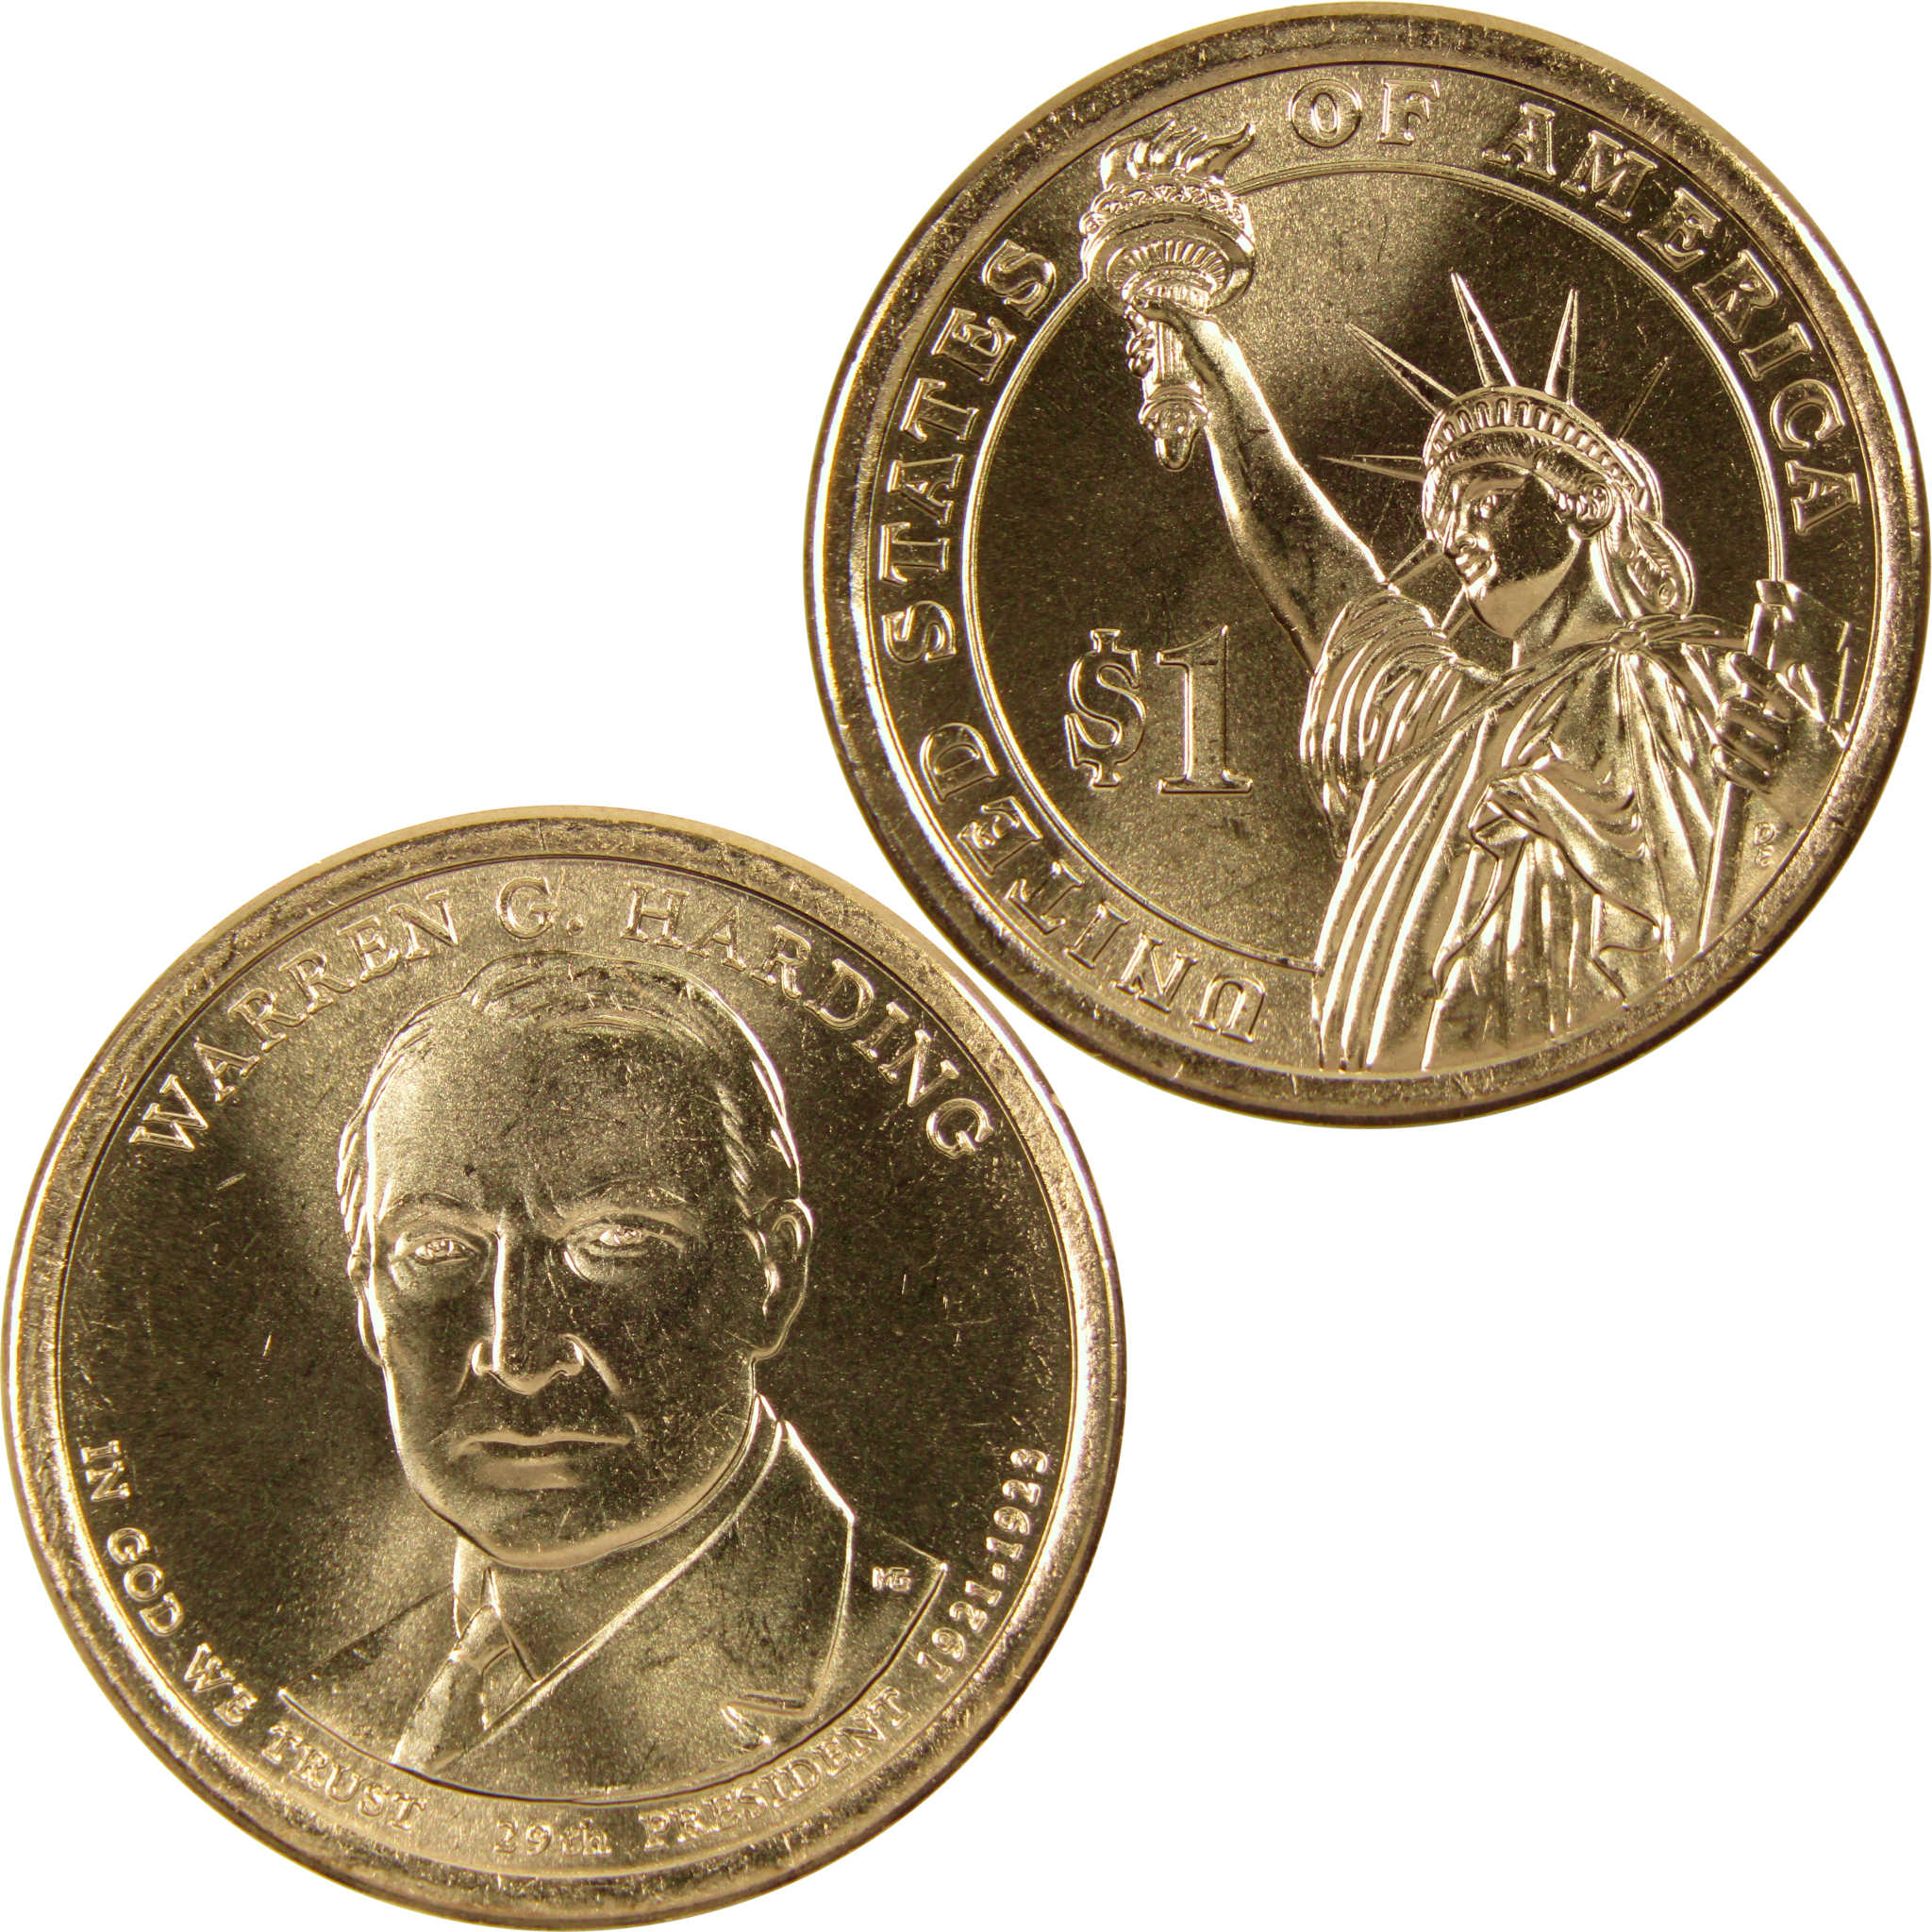 2014 D Warren G Harding Presidential Dollar BU Uncirculated $1 Coin